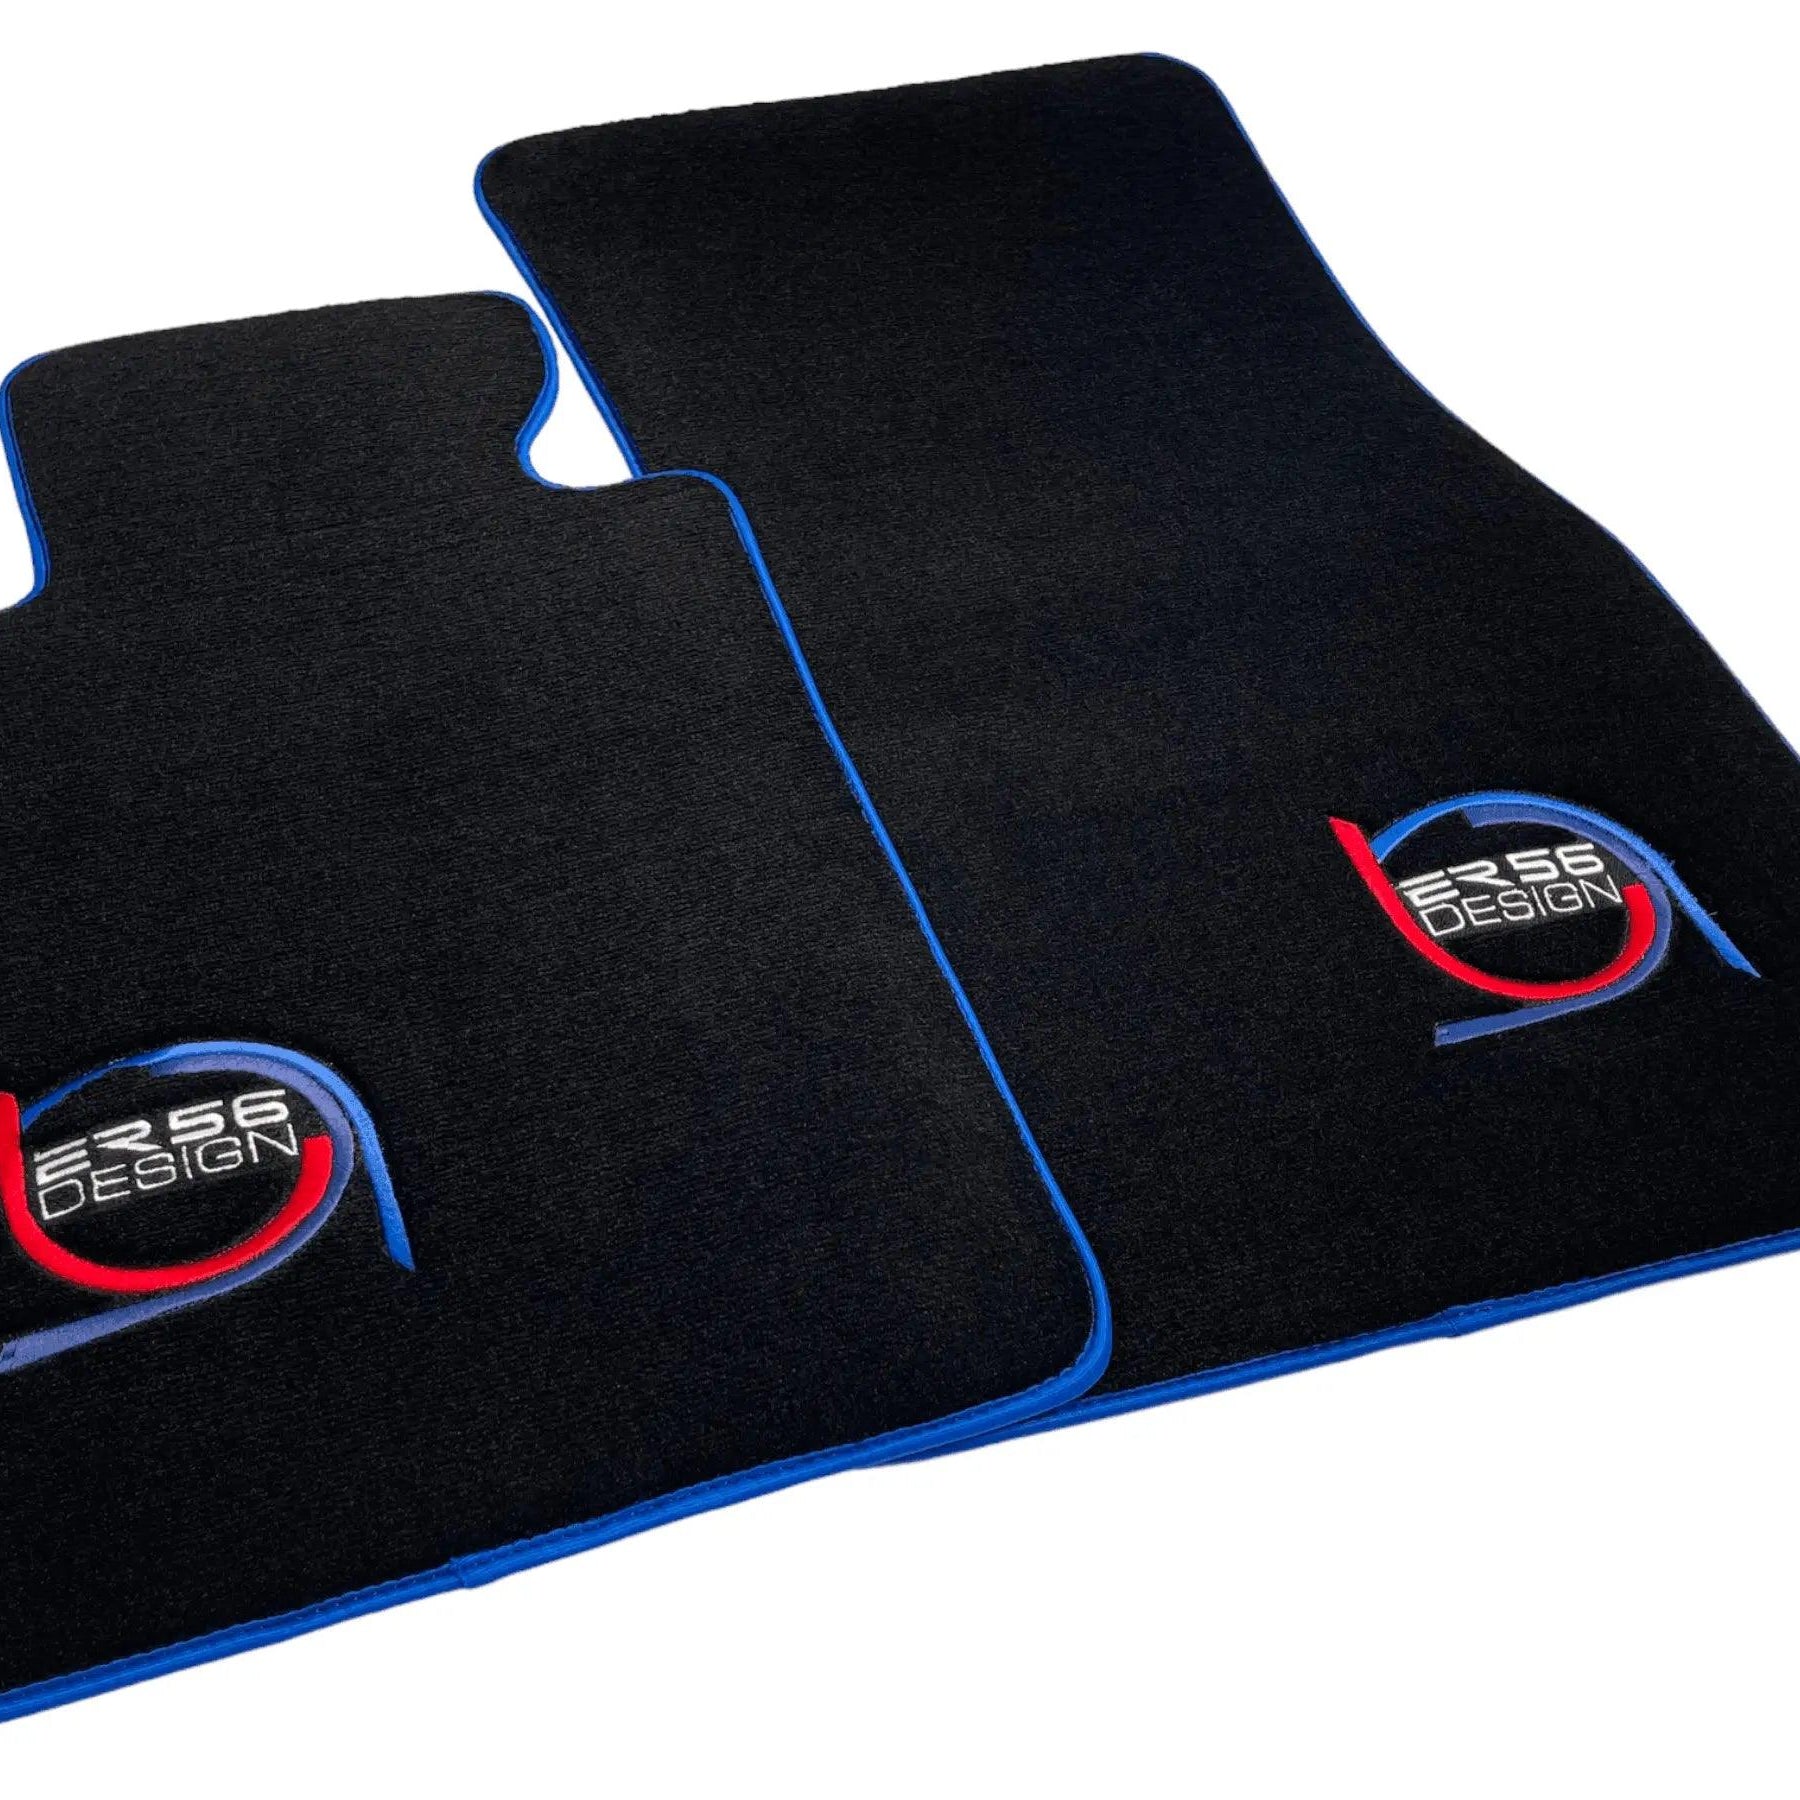 Black Floor Mats For BMW 5 Series E34 Sedan ER56 Design Limited Edition Blue Trim - AutoWin